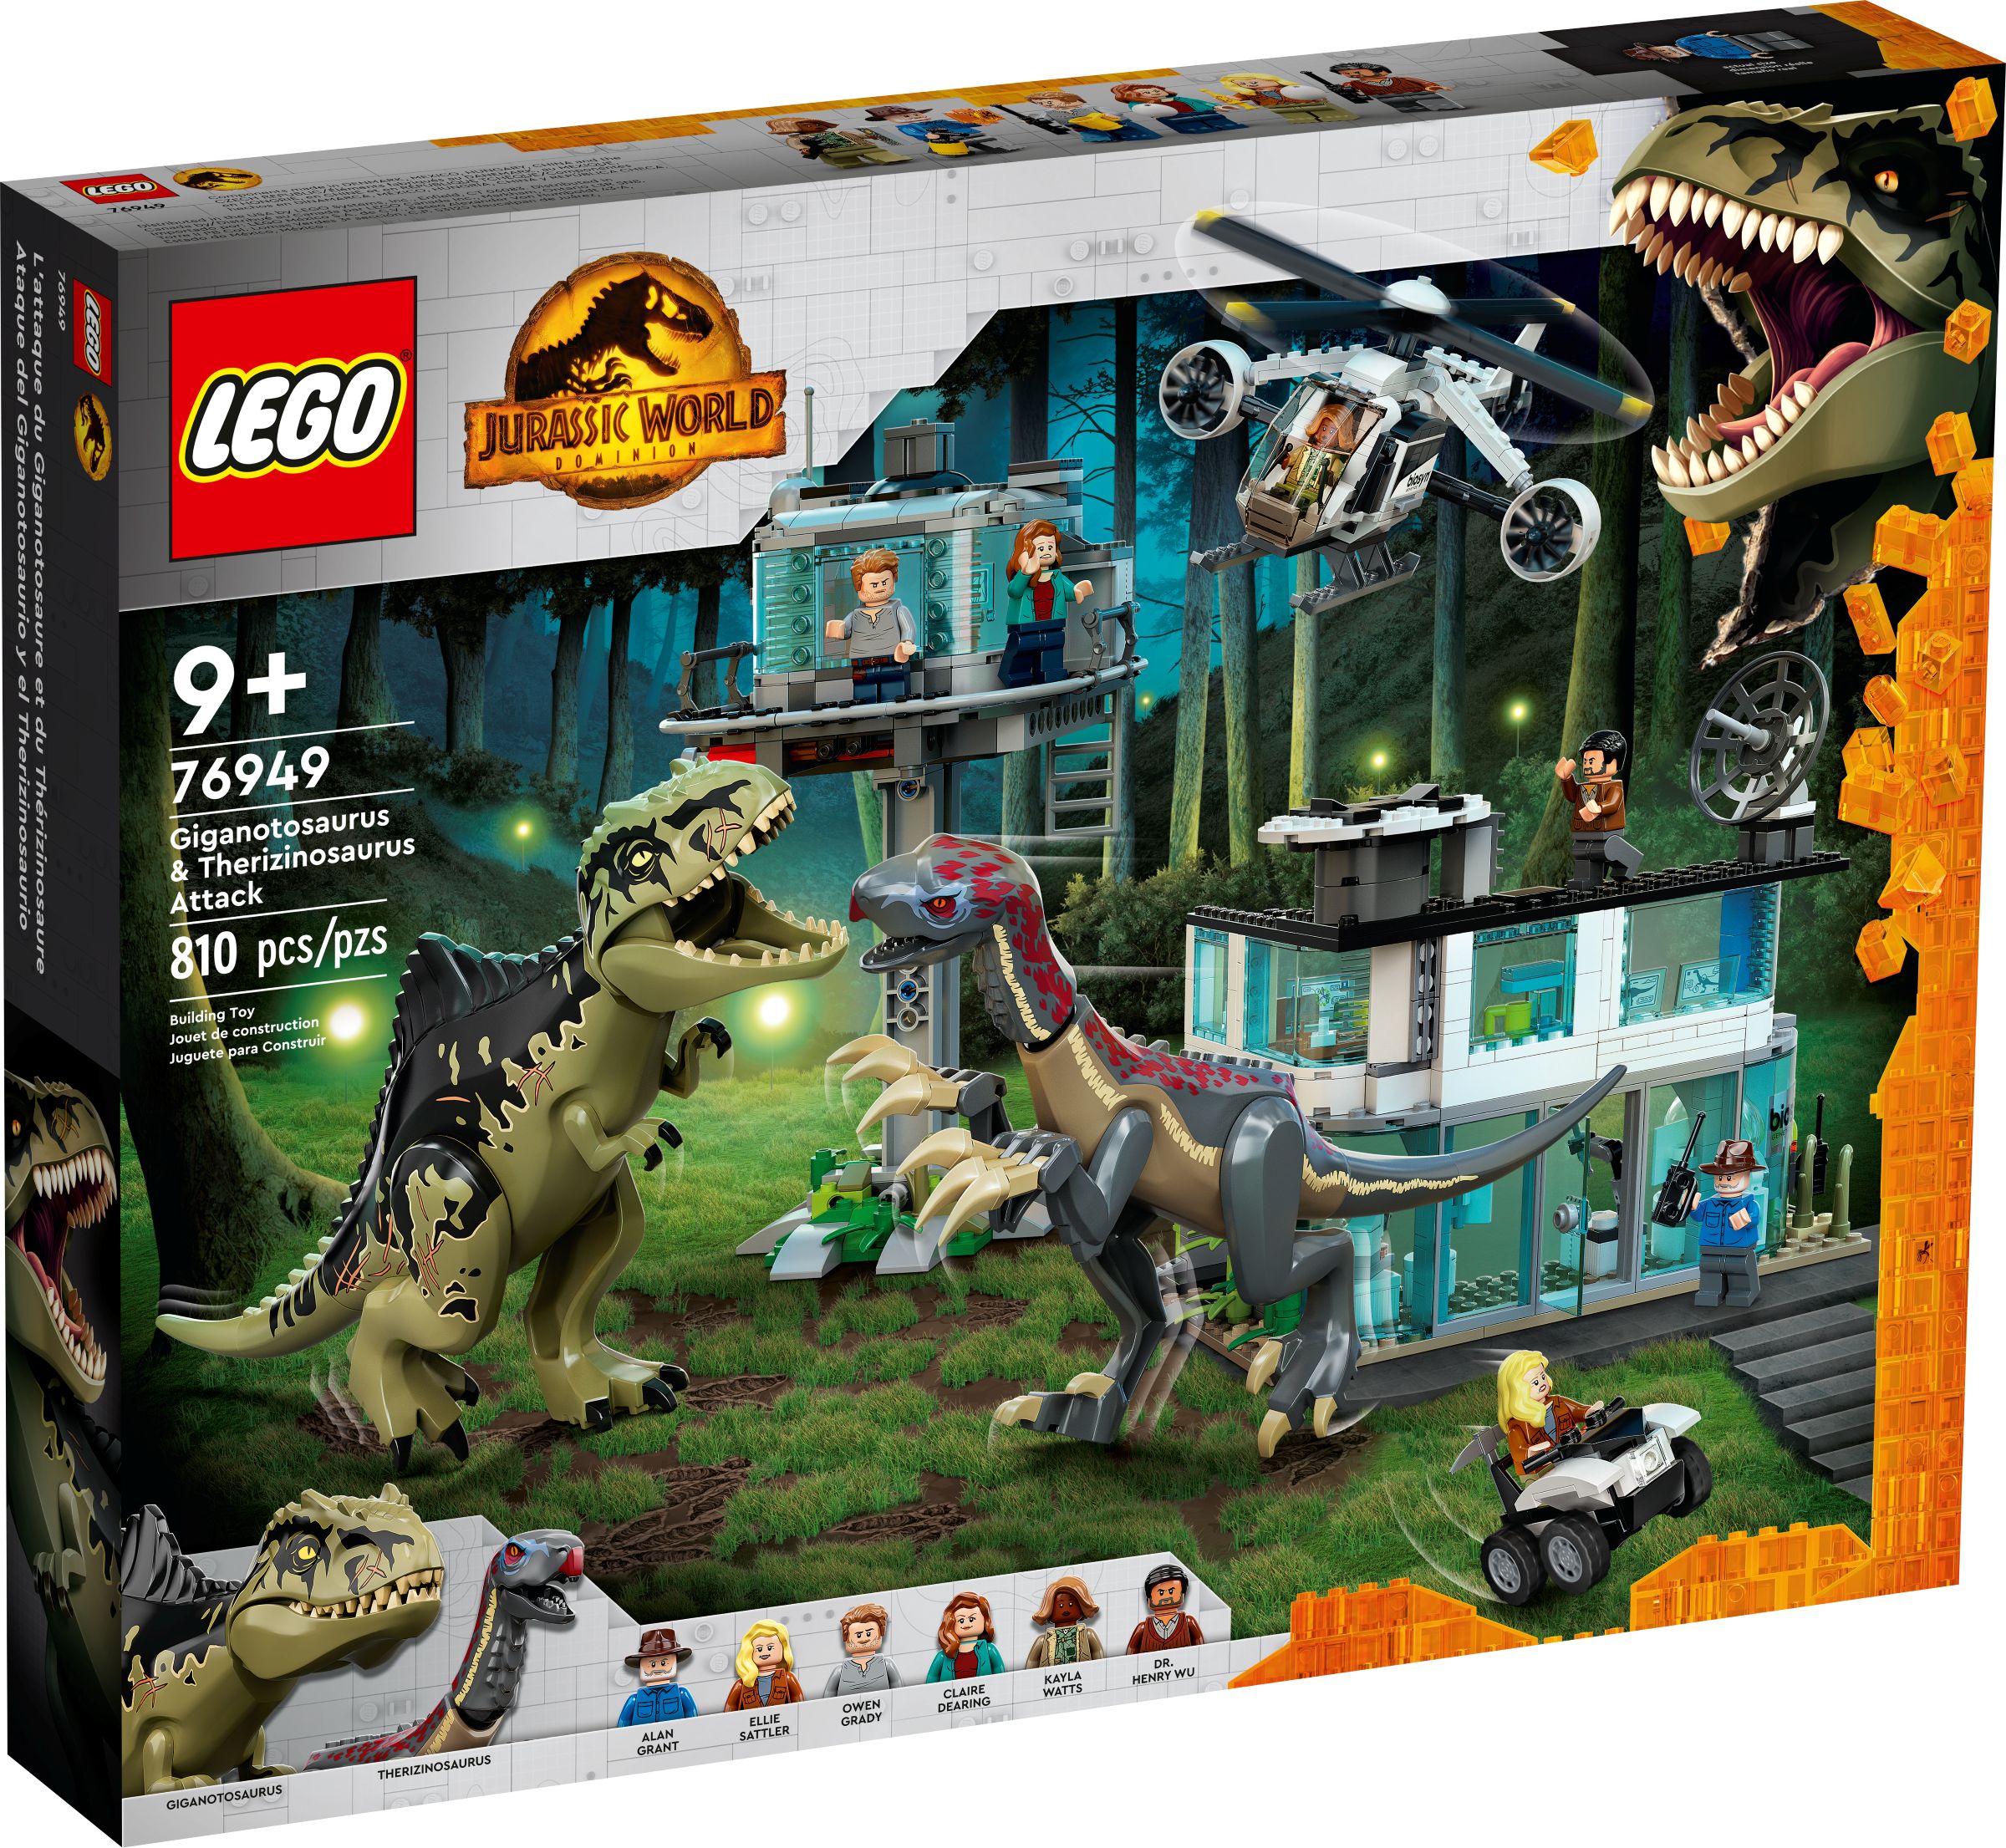 LEGO Jurassic World 76949 Giganotosaurus & Therizinosaurus Angriff LEGO_76949_alt1.jpg